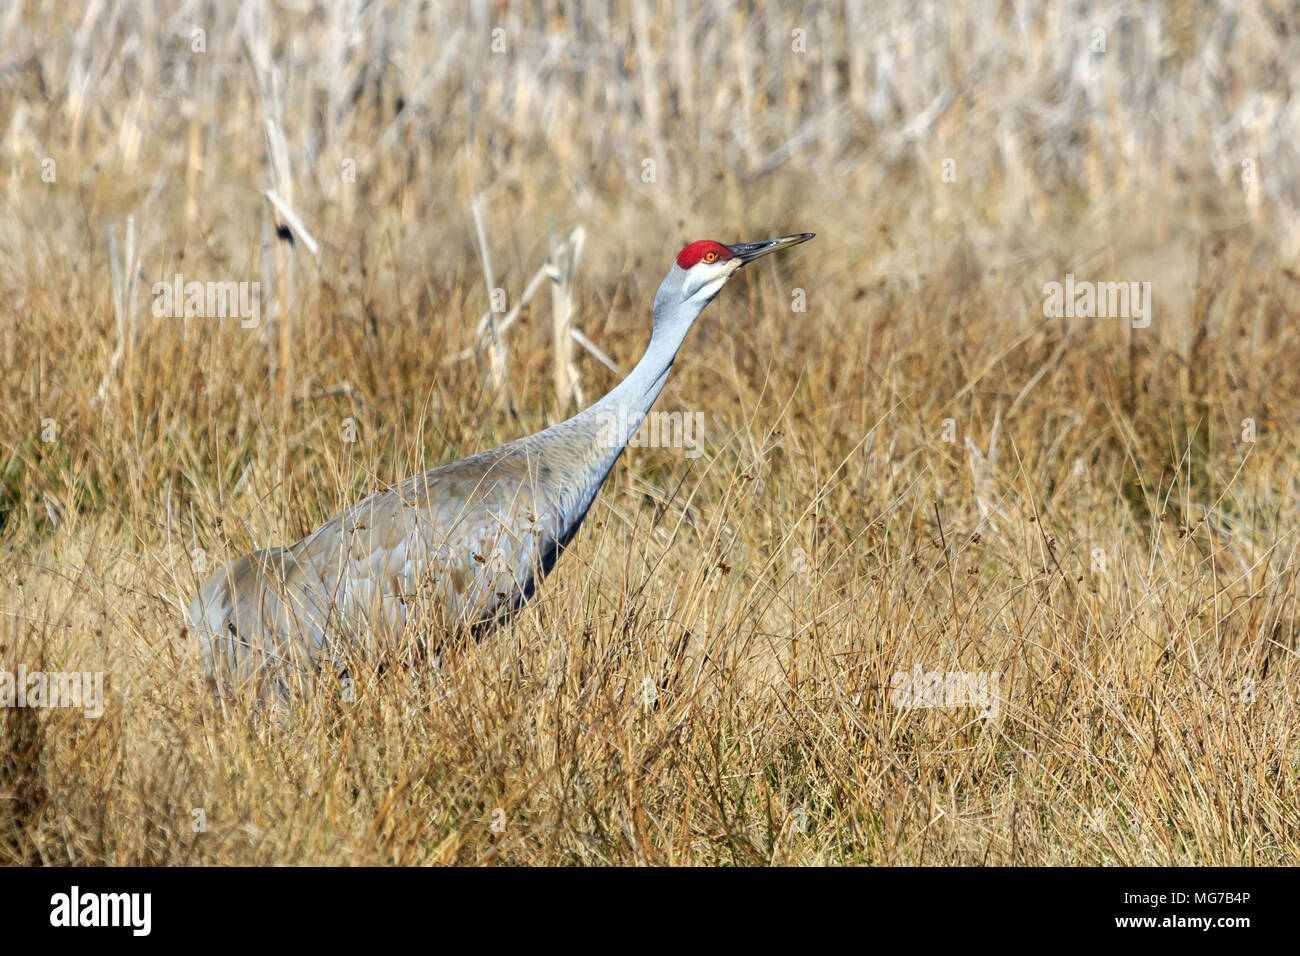 Sandhill Crane walking in long grass Stock Photo